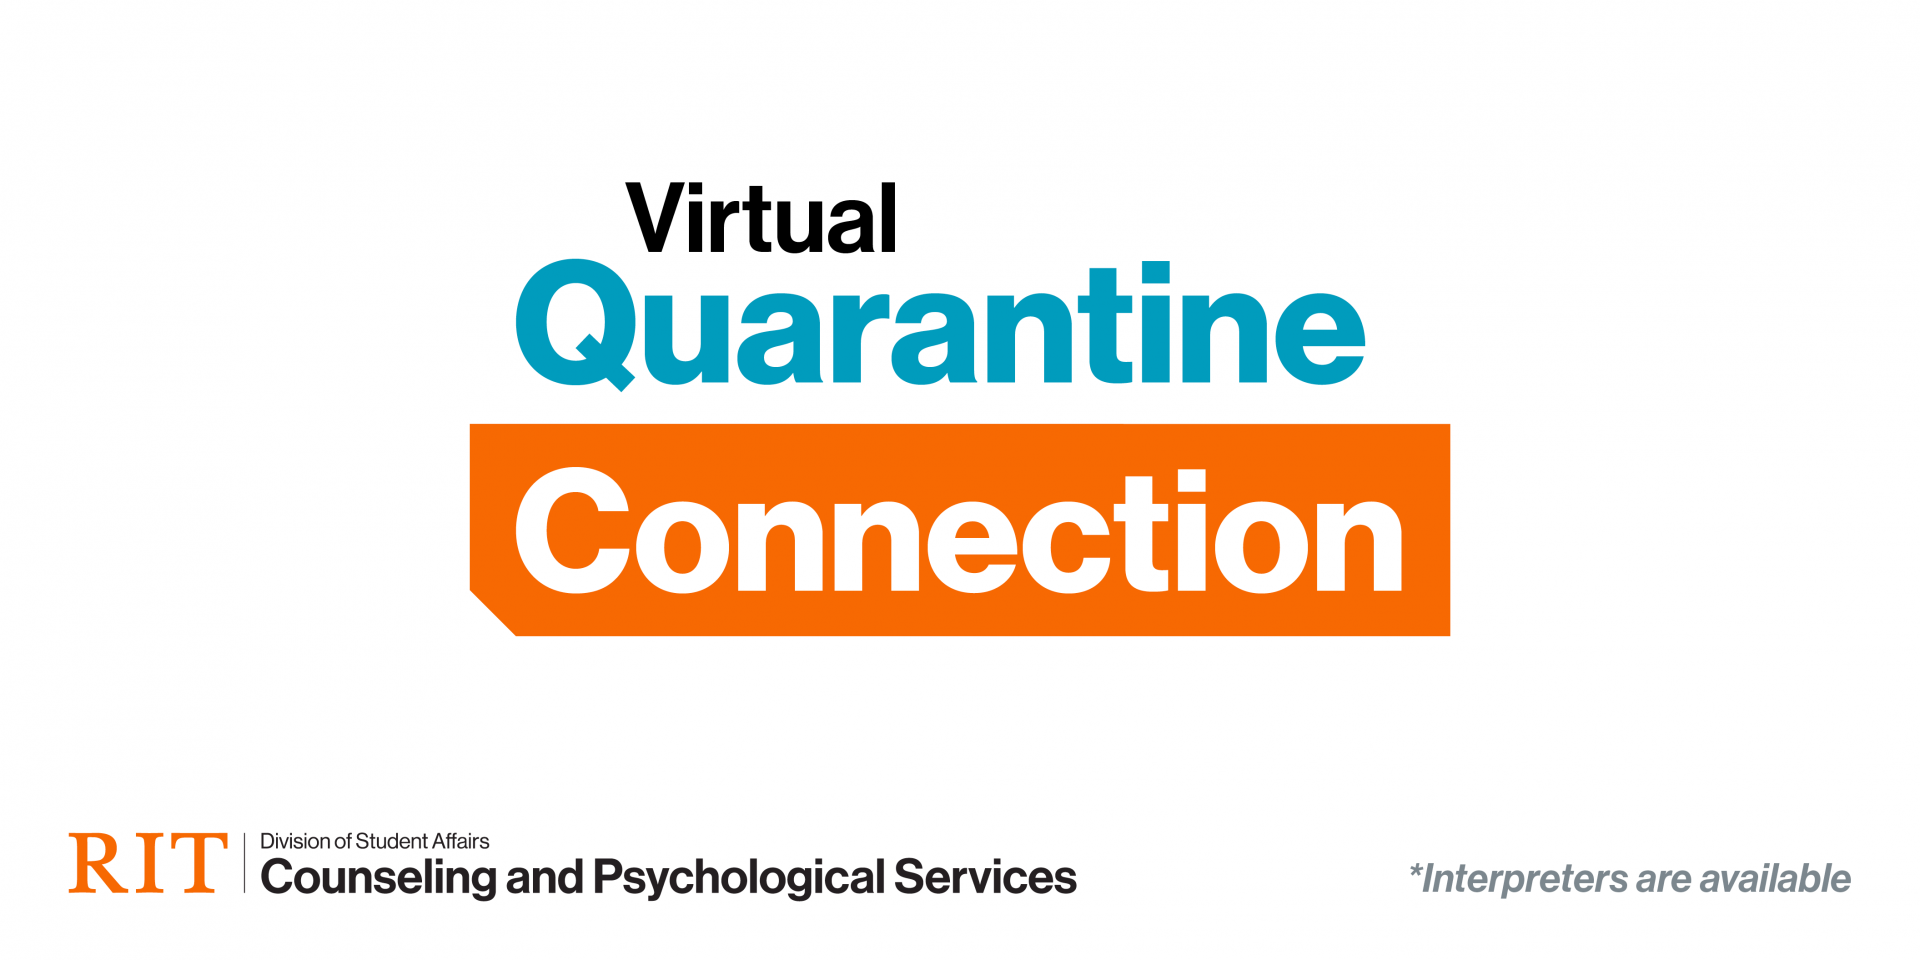 Virtual Quarantine Connection